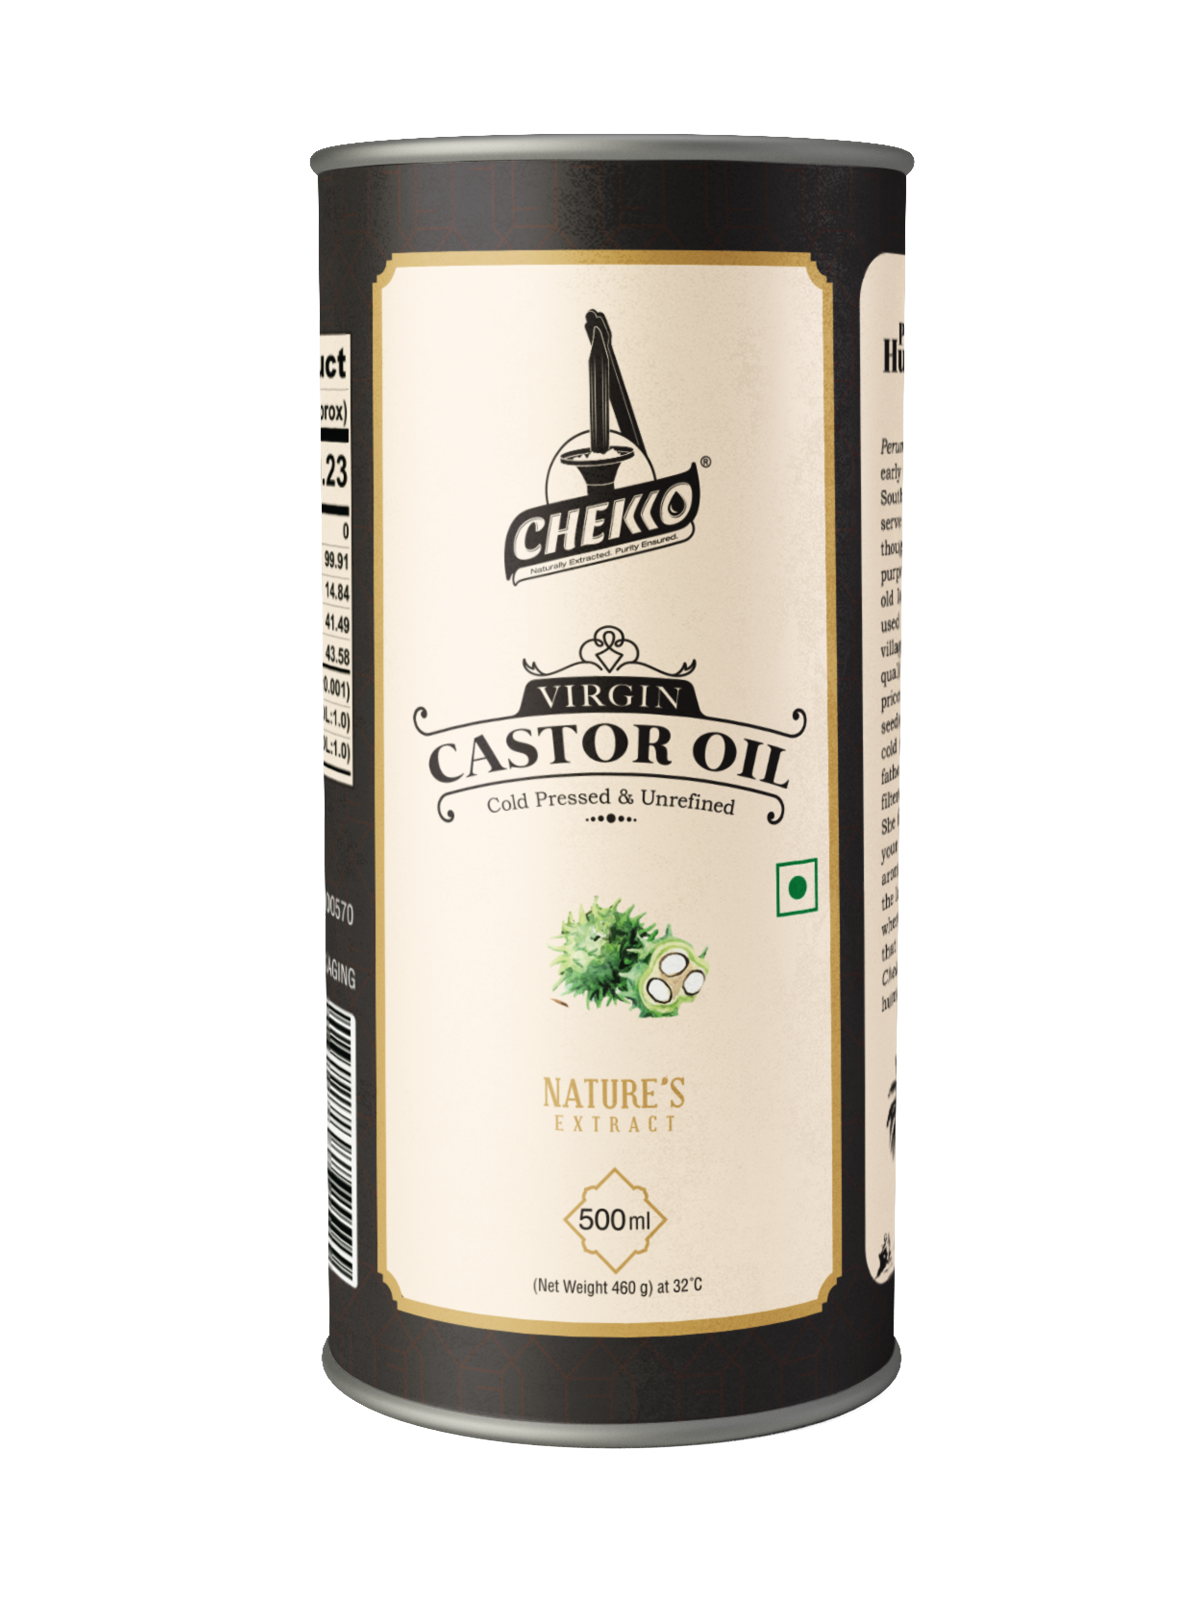 Chekko Cold Pressed Virgin Castor Oil - Chekko Oils Store